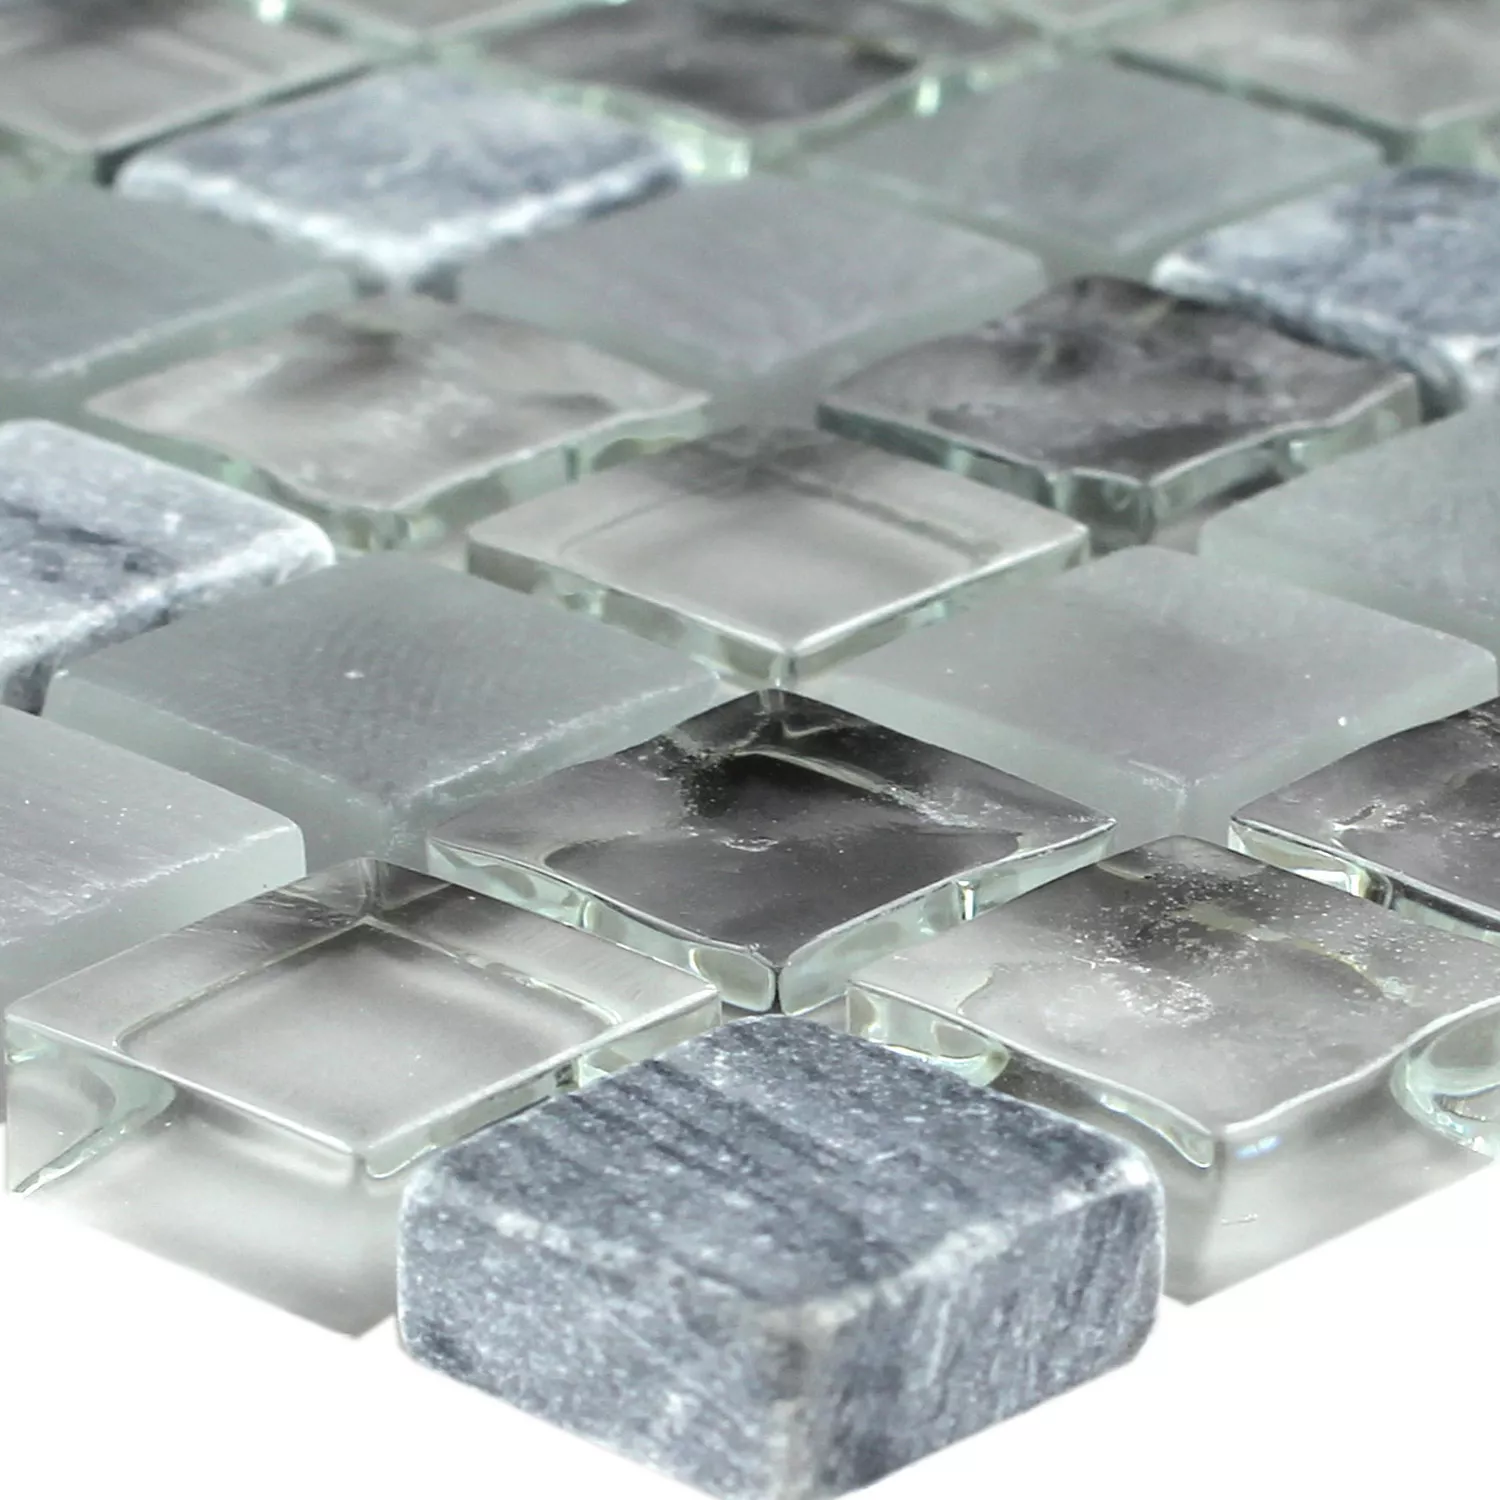 Sample Mosaic Tiles Glass Marble Light Grey 